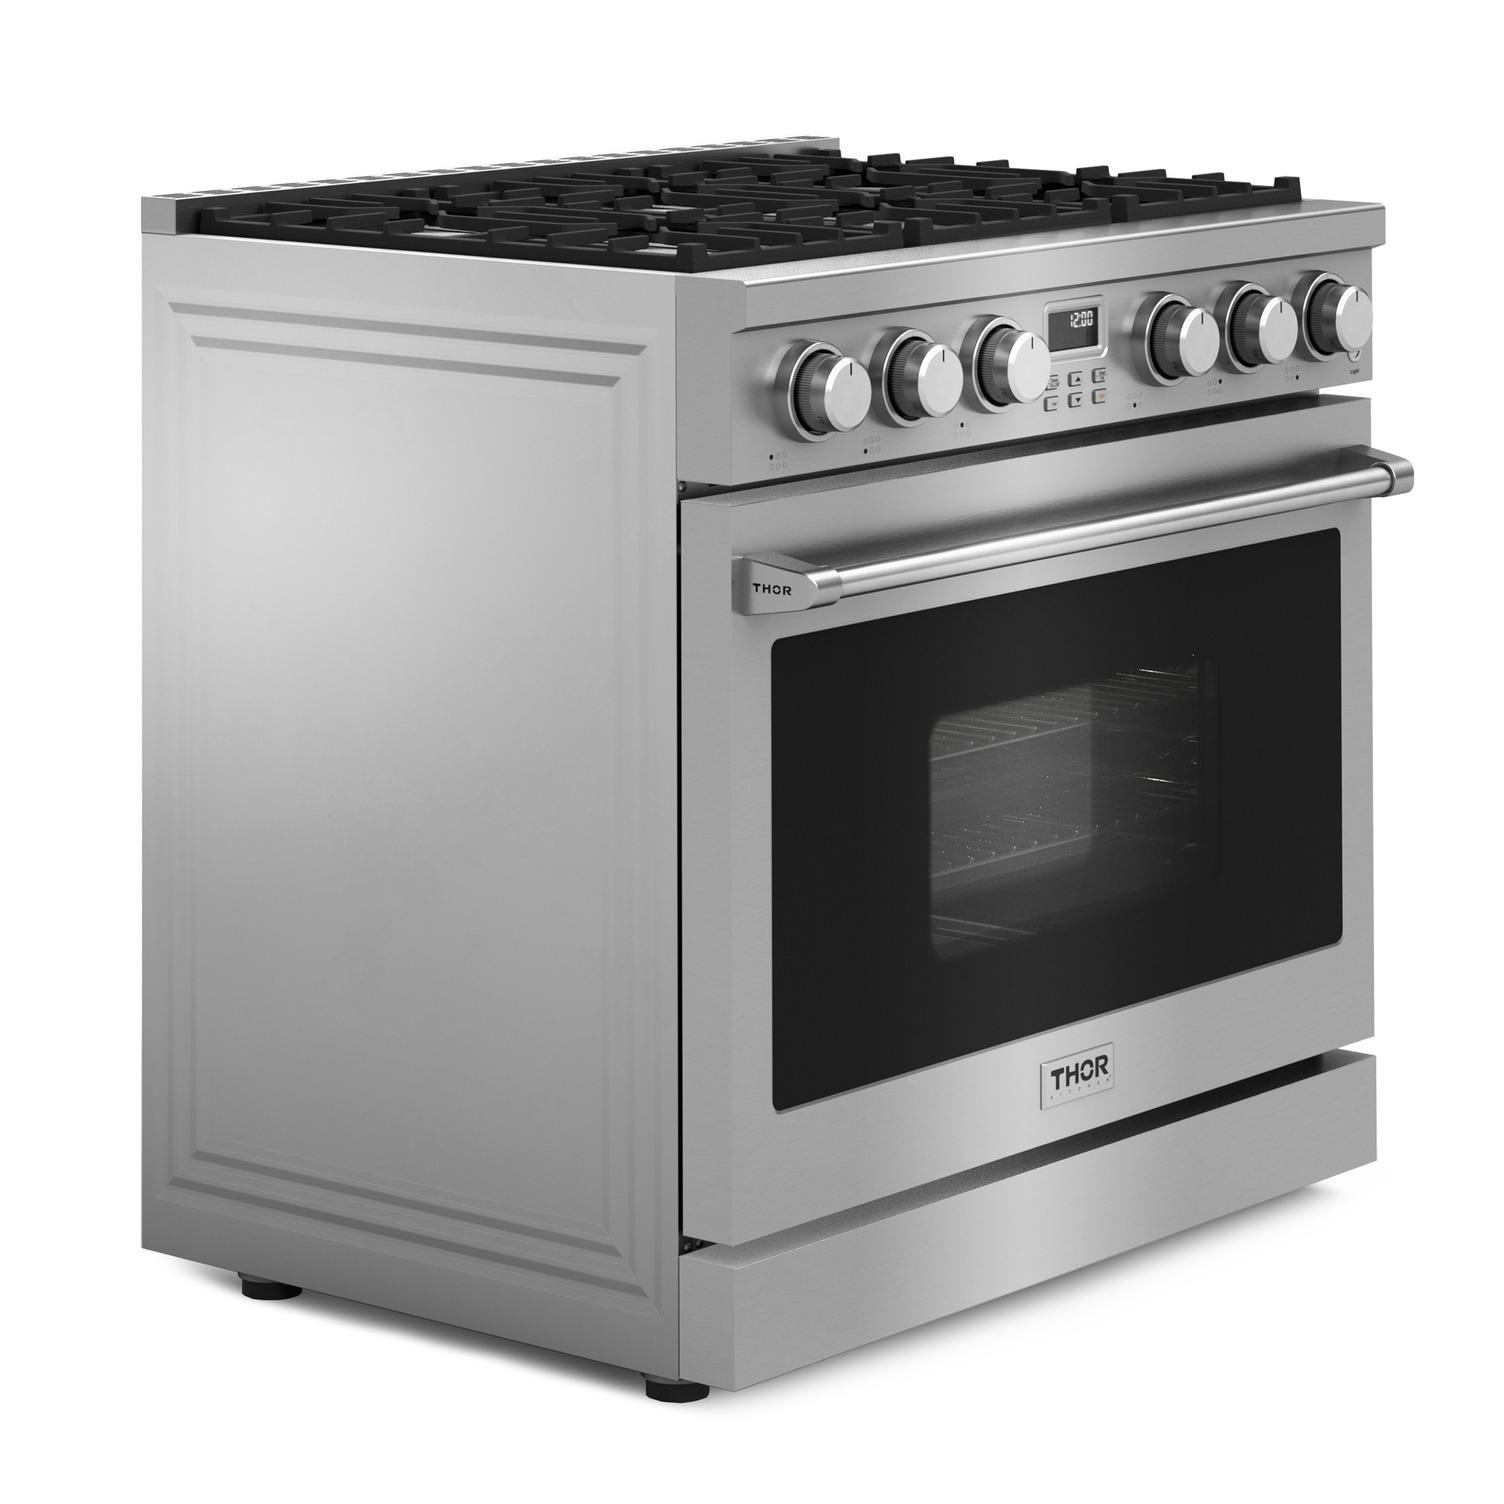 Thor Kitchen 36-inch Contemporary Professional Gas Range - Arg36/arg36lp - Liquid Propane